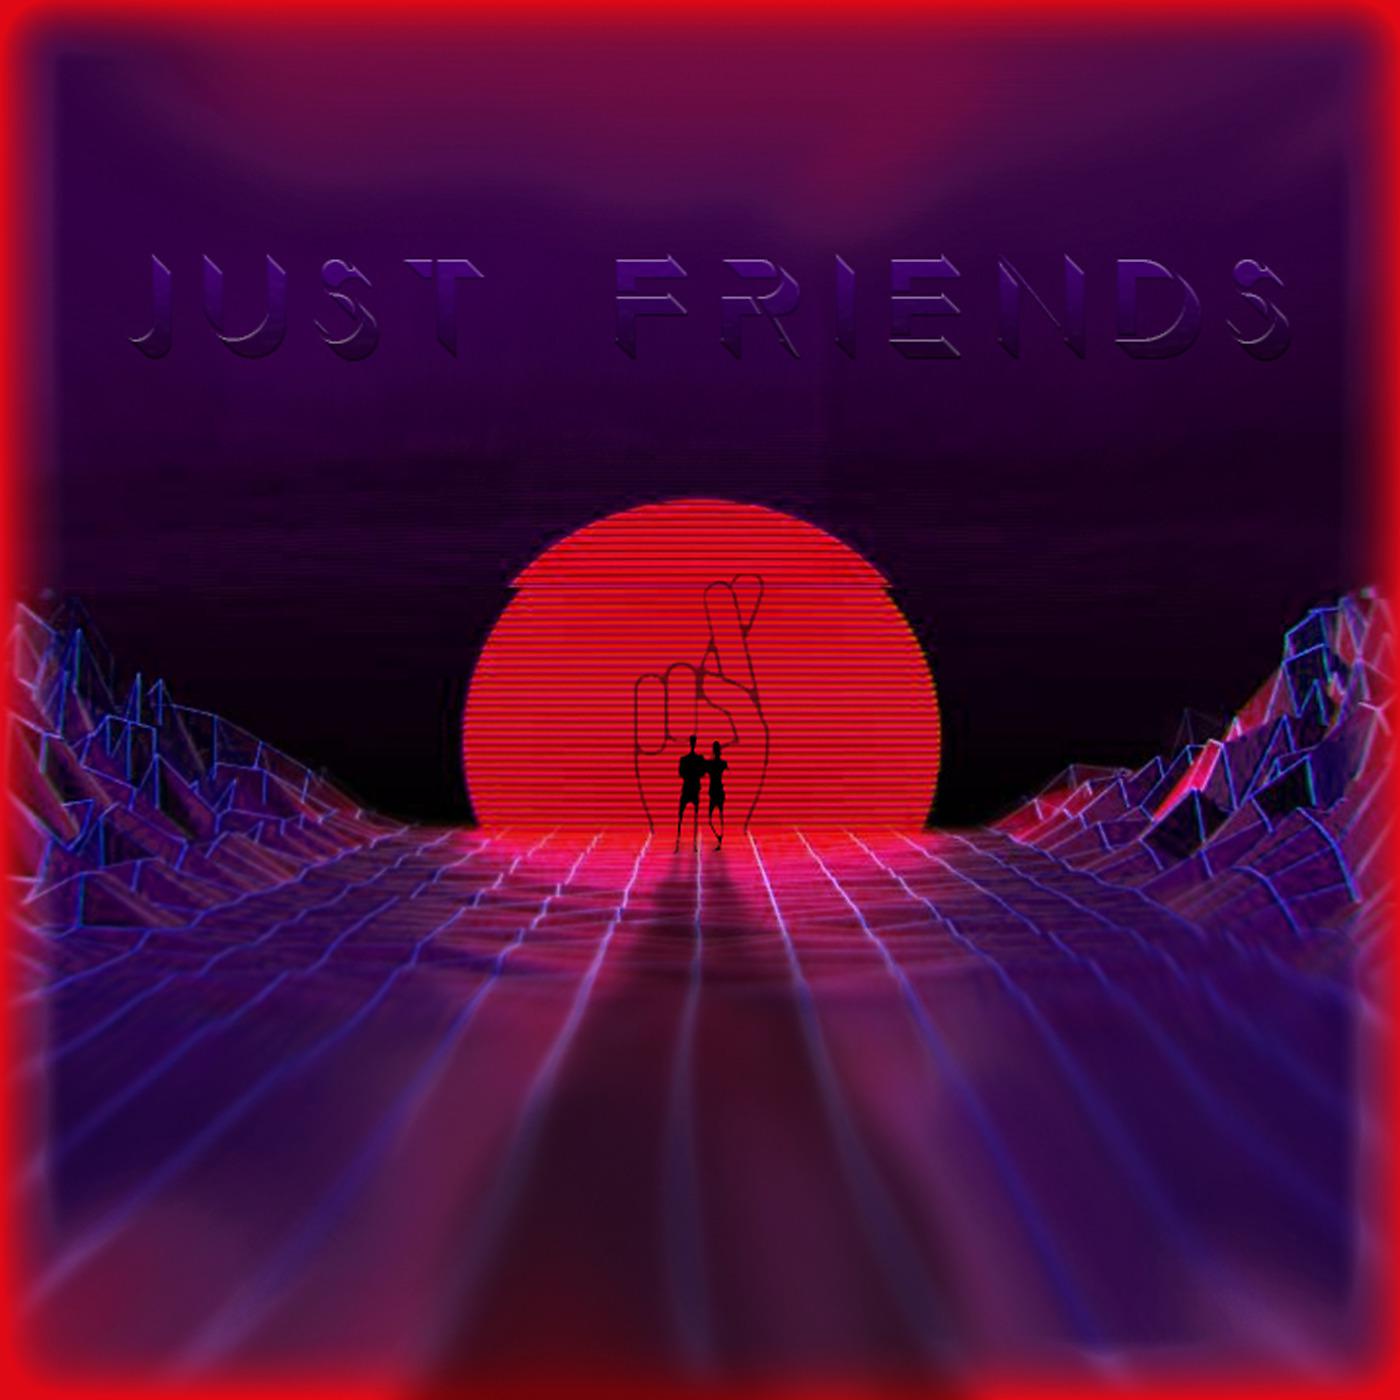 Постер альбома Just Friends